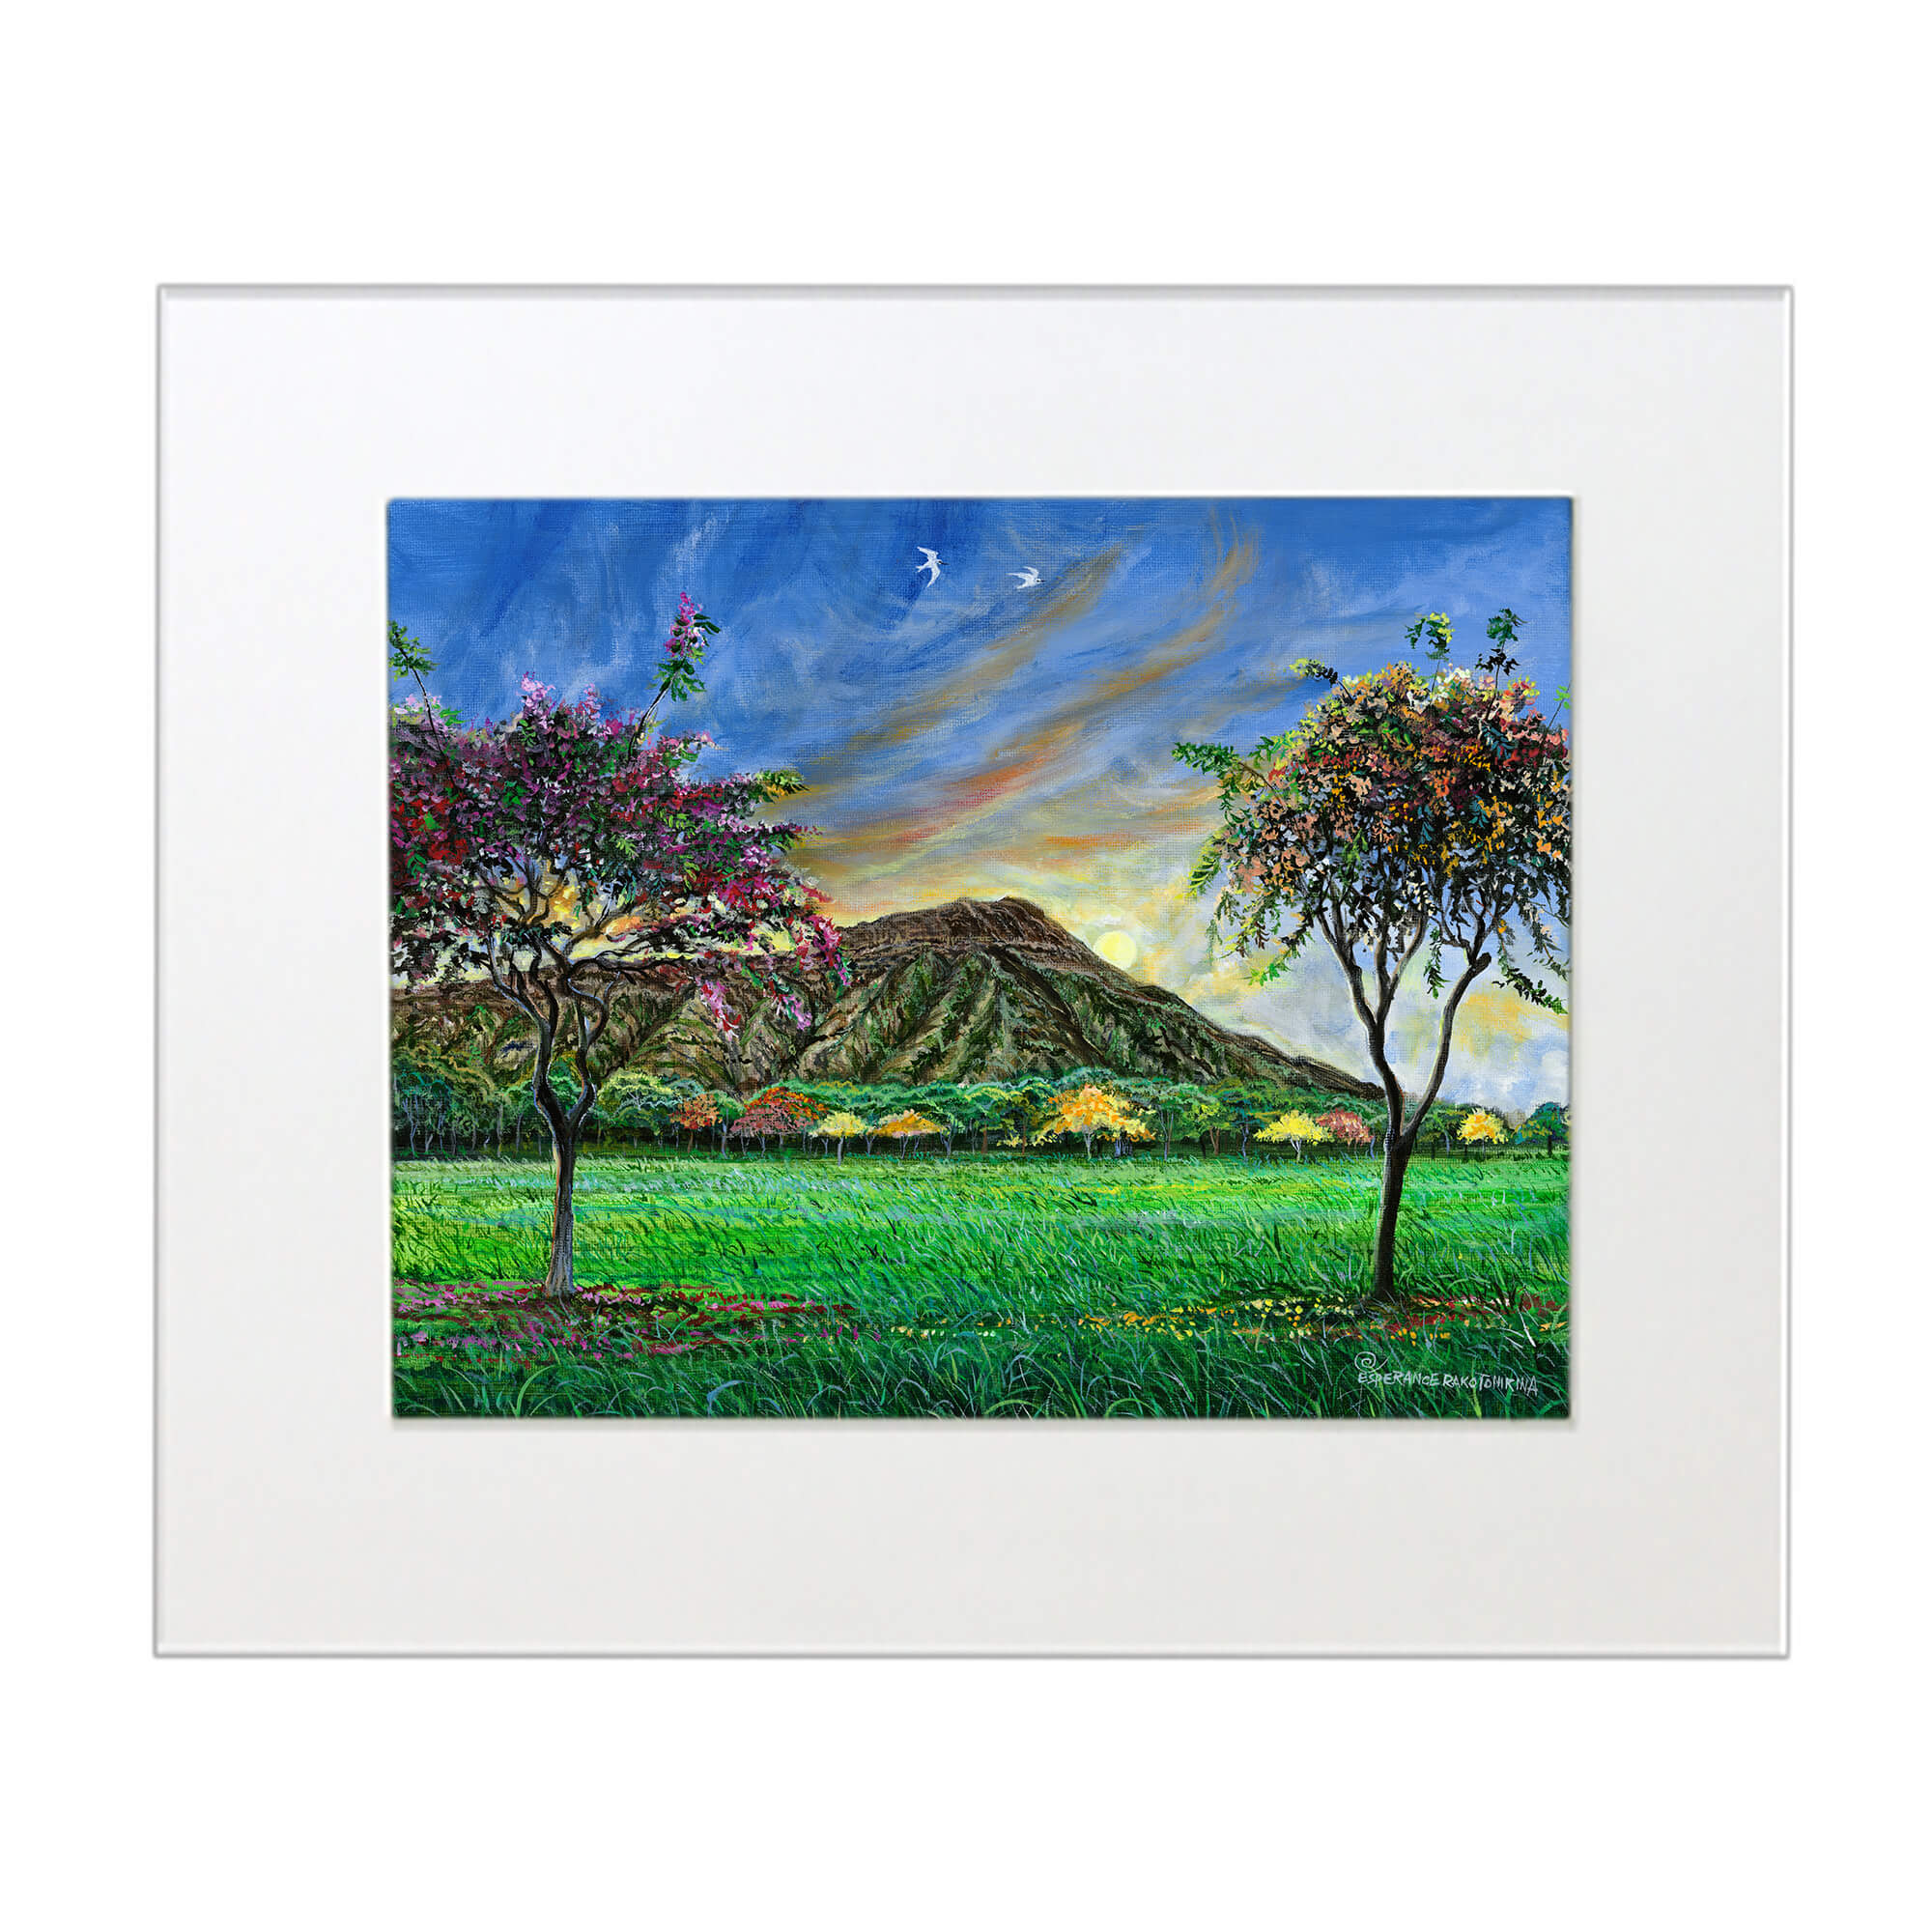 Matted art print  illustrating a Mountain landscape with trees by hawaii artist Esperance Rakotonirina